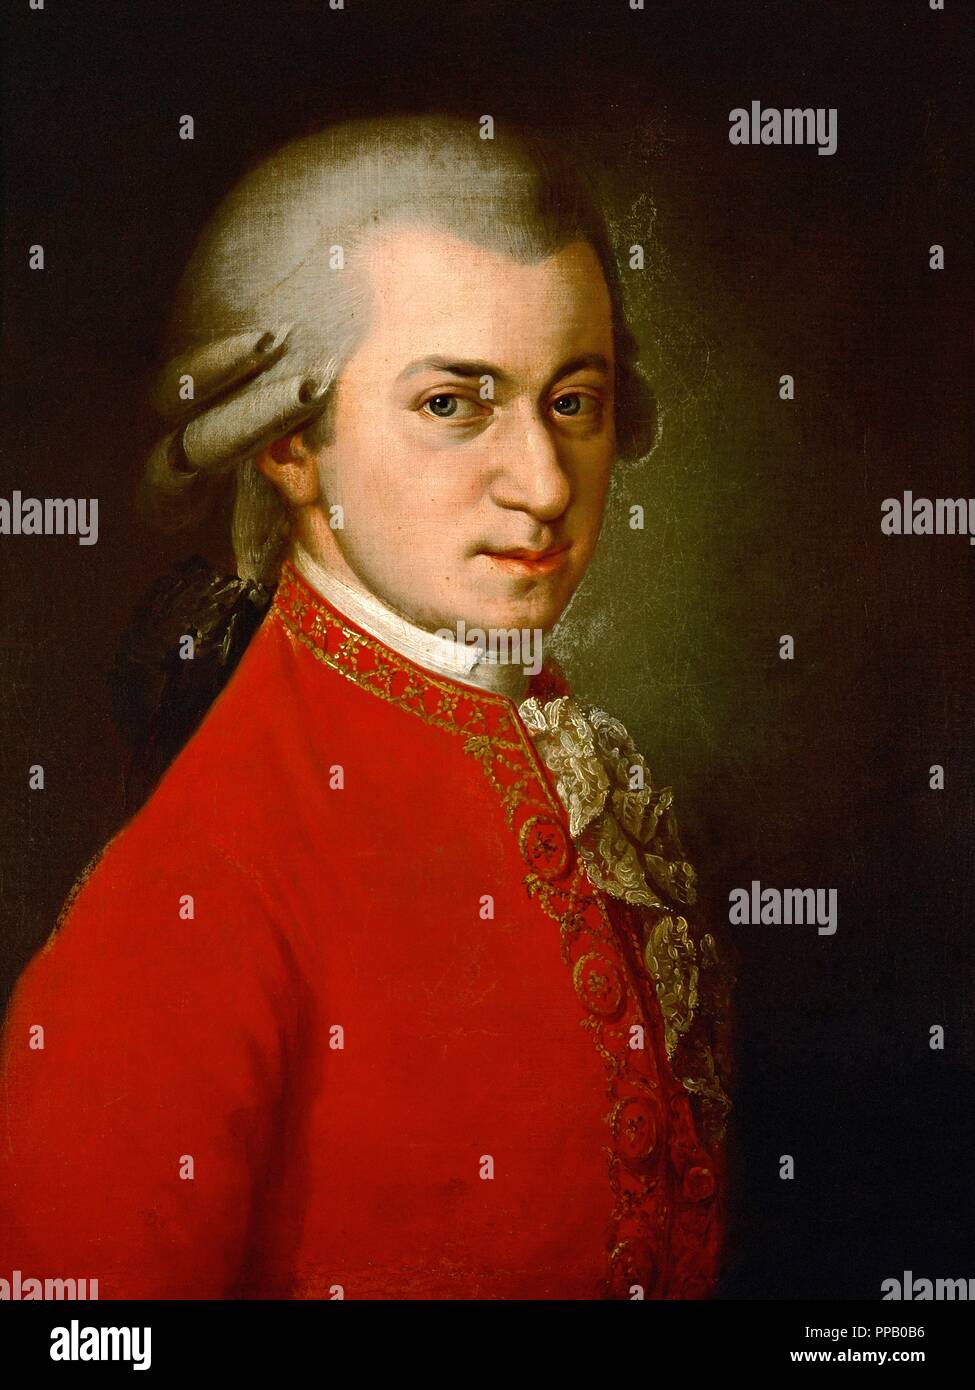 Austrian composer Wolfgang Amadeus Mozart. Painting by Barbar Krafft. 1819. Stock Photo